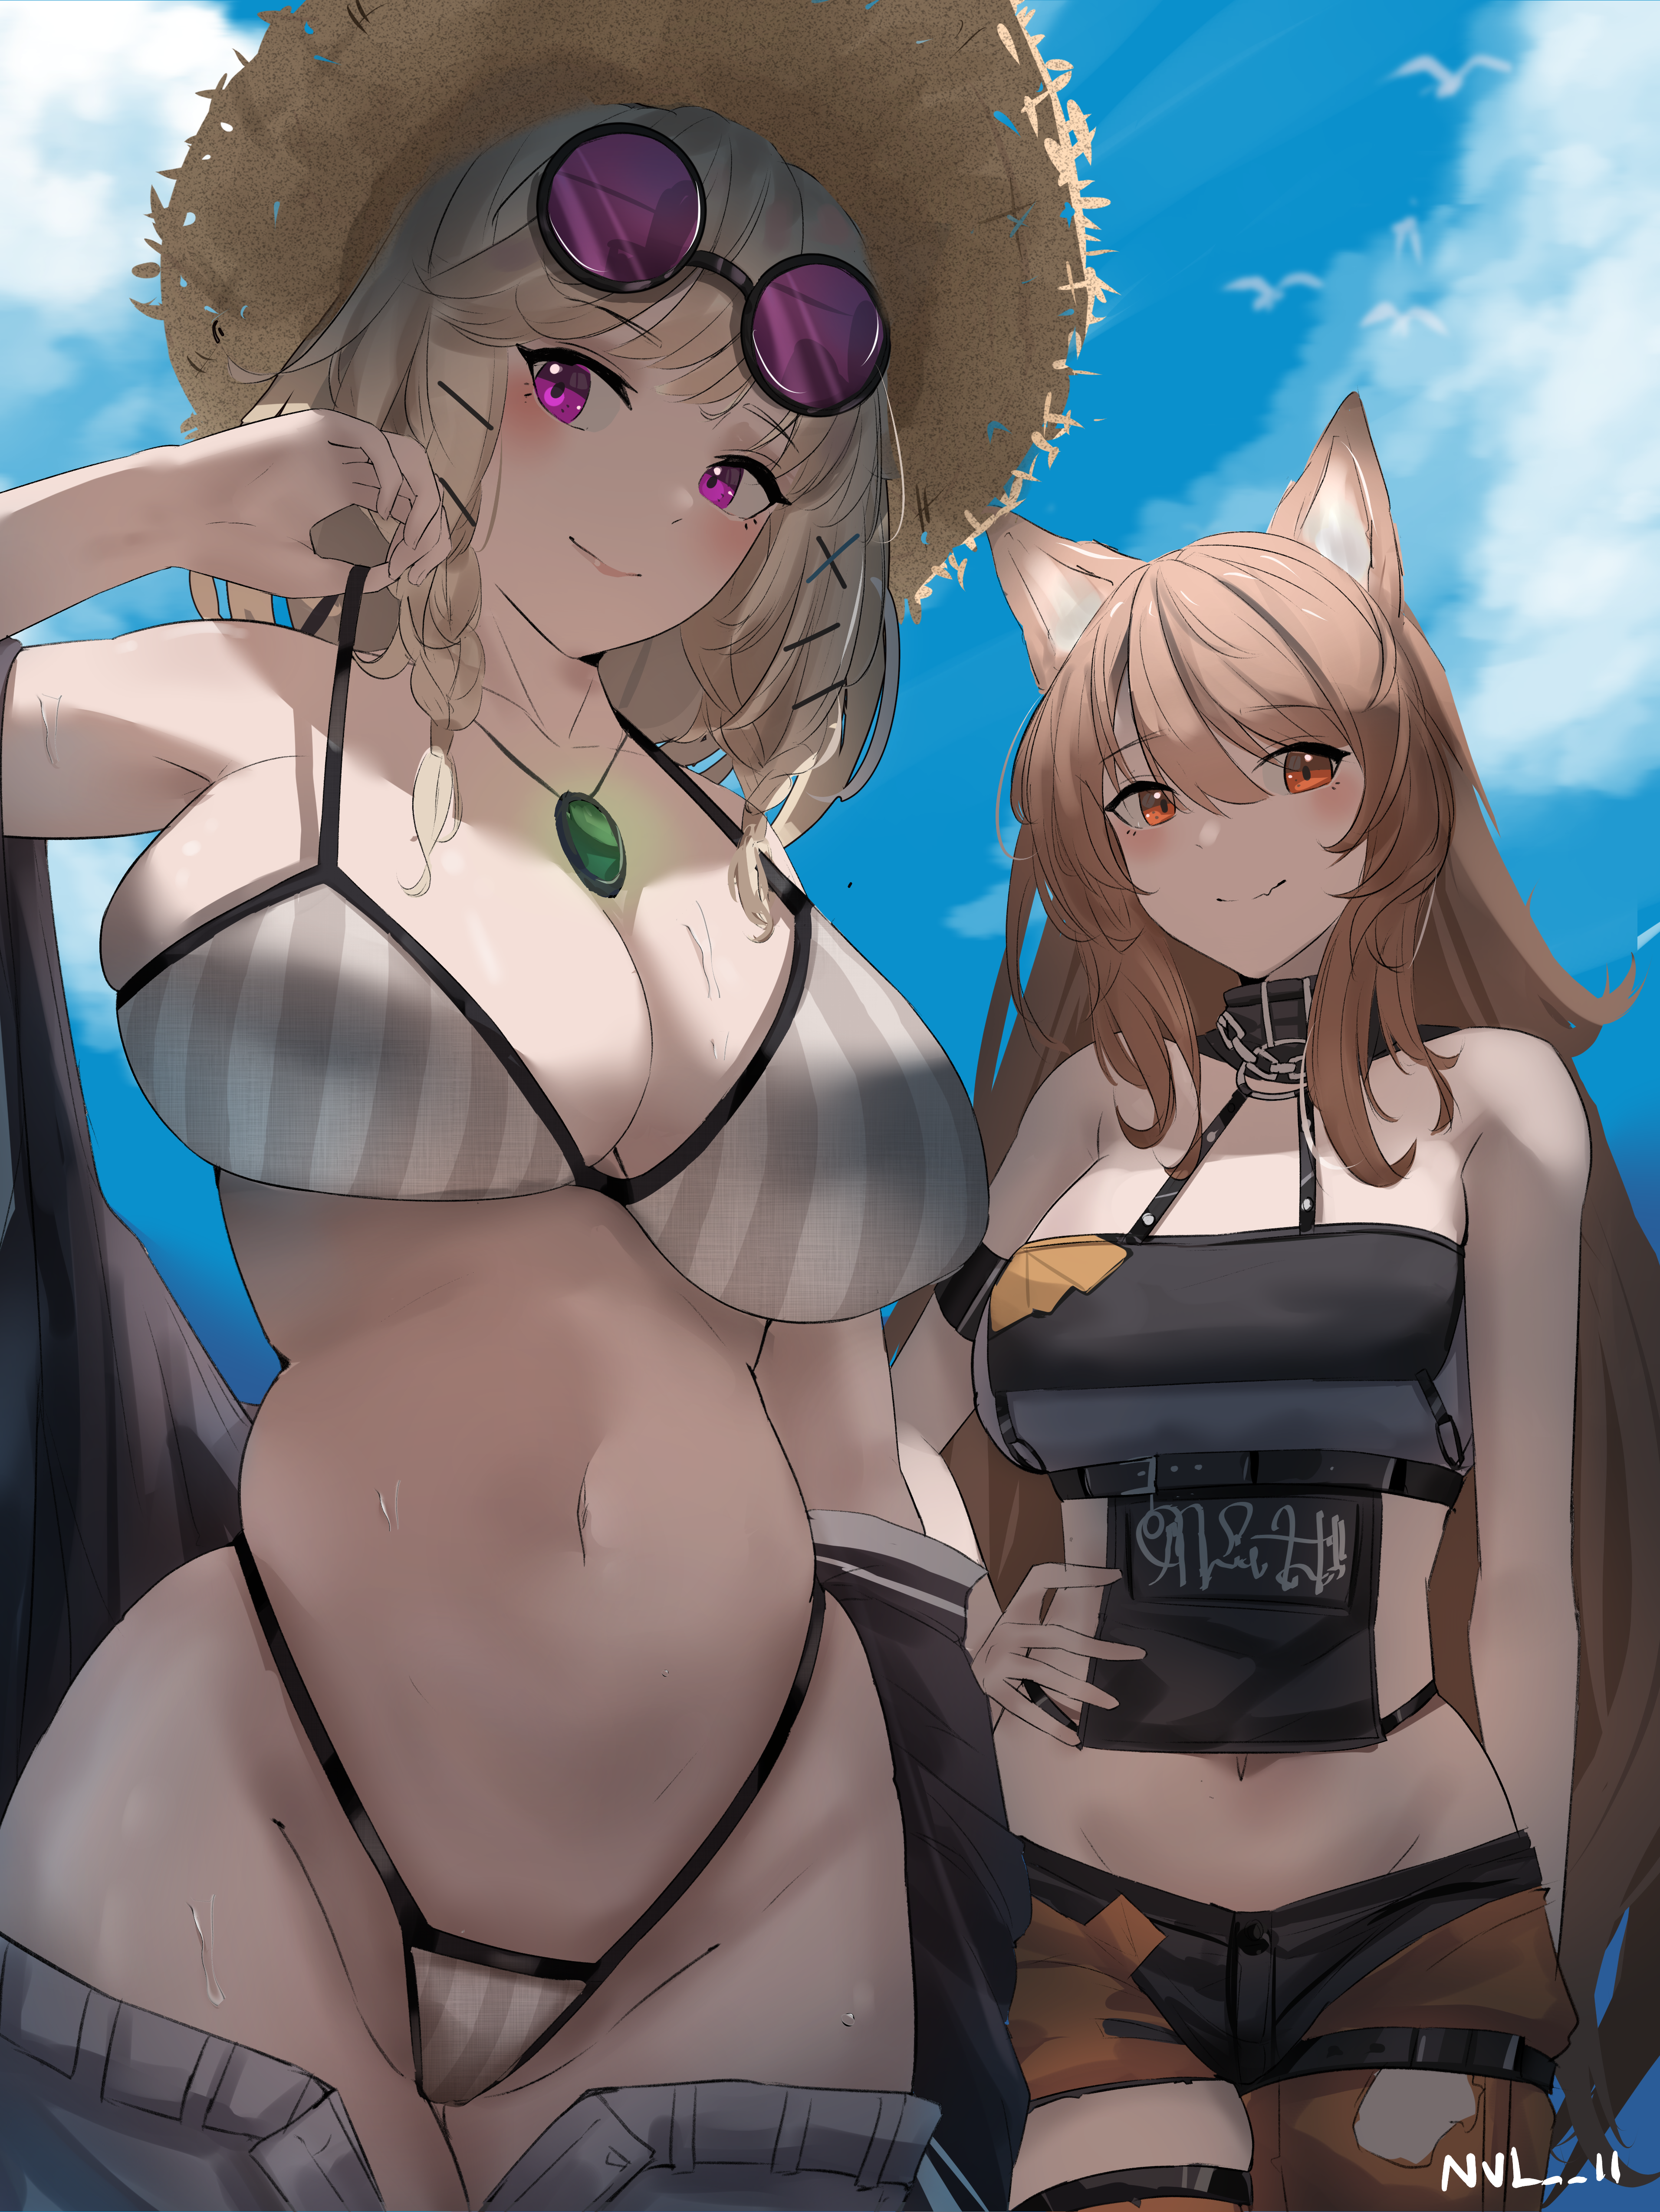 Anime 3825x5096 bikini Ceobe (Arknights) Utage (Arknights) Arknights straw hat hat fox girl fox ears big boobs belly sunglasses anime girls Nvl